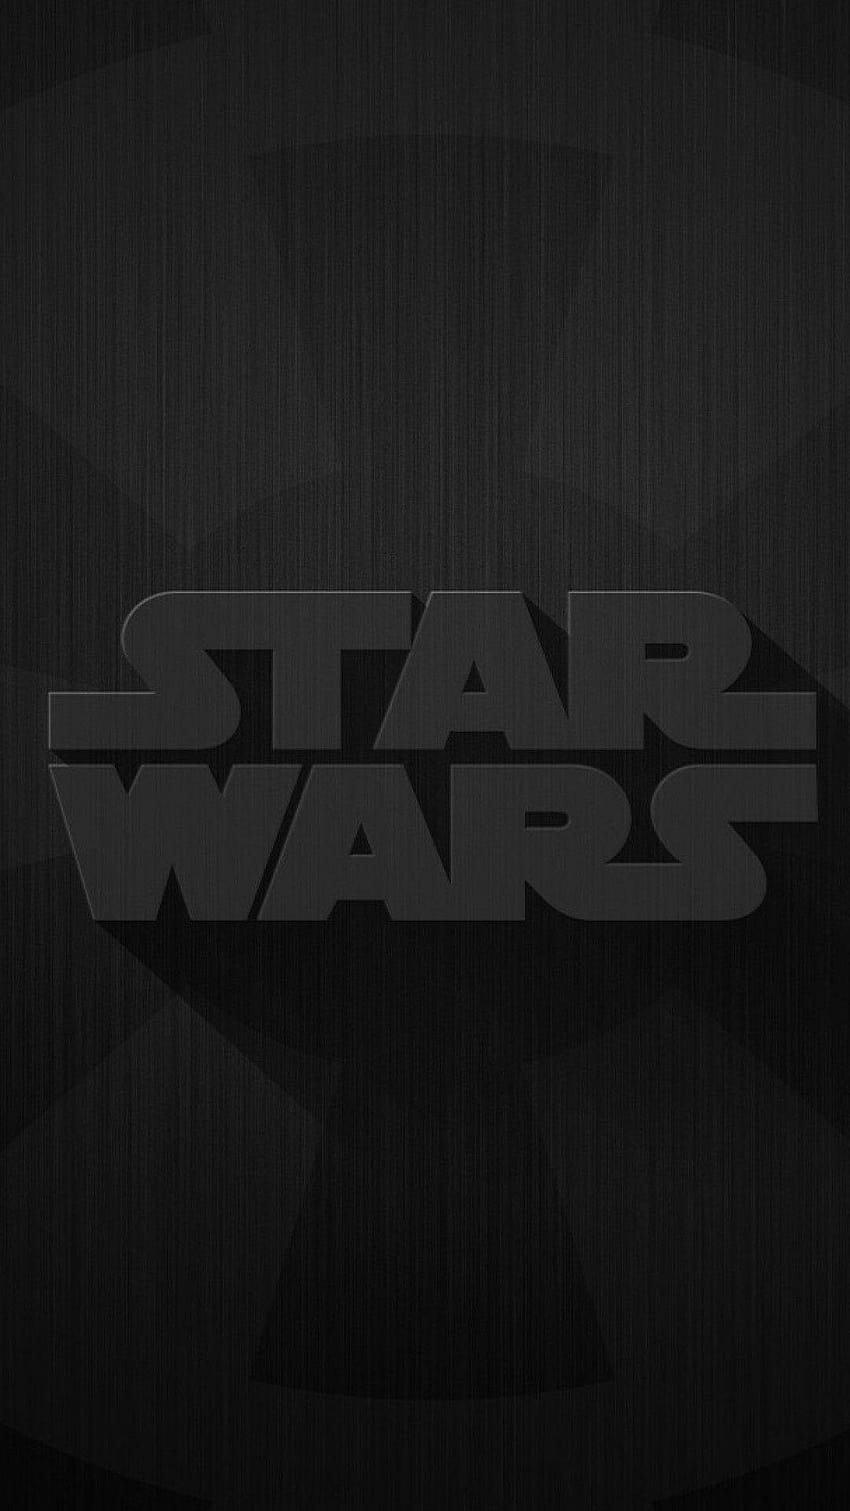 Star Wars backgrounds, death star black background HD phone wallpaper